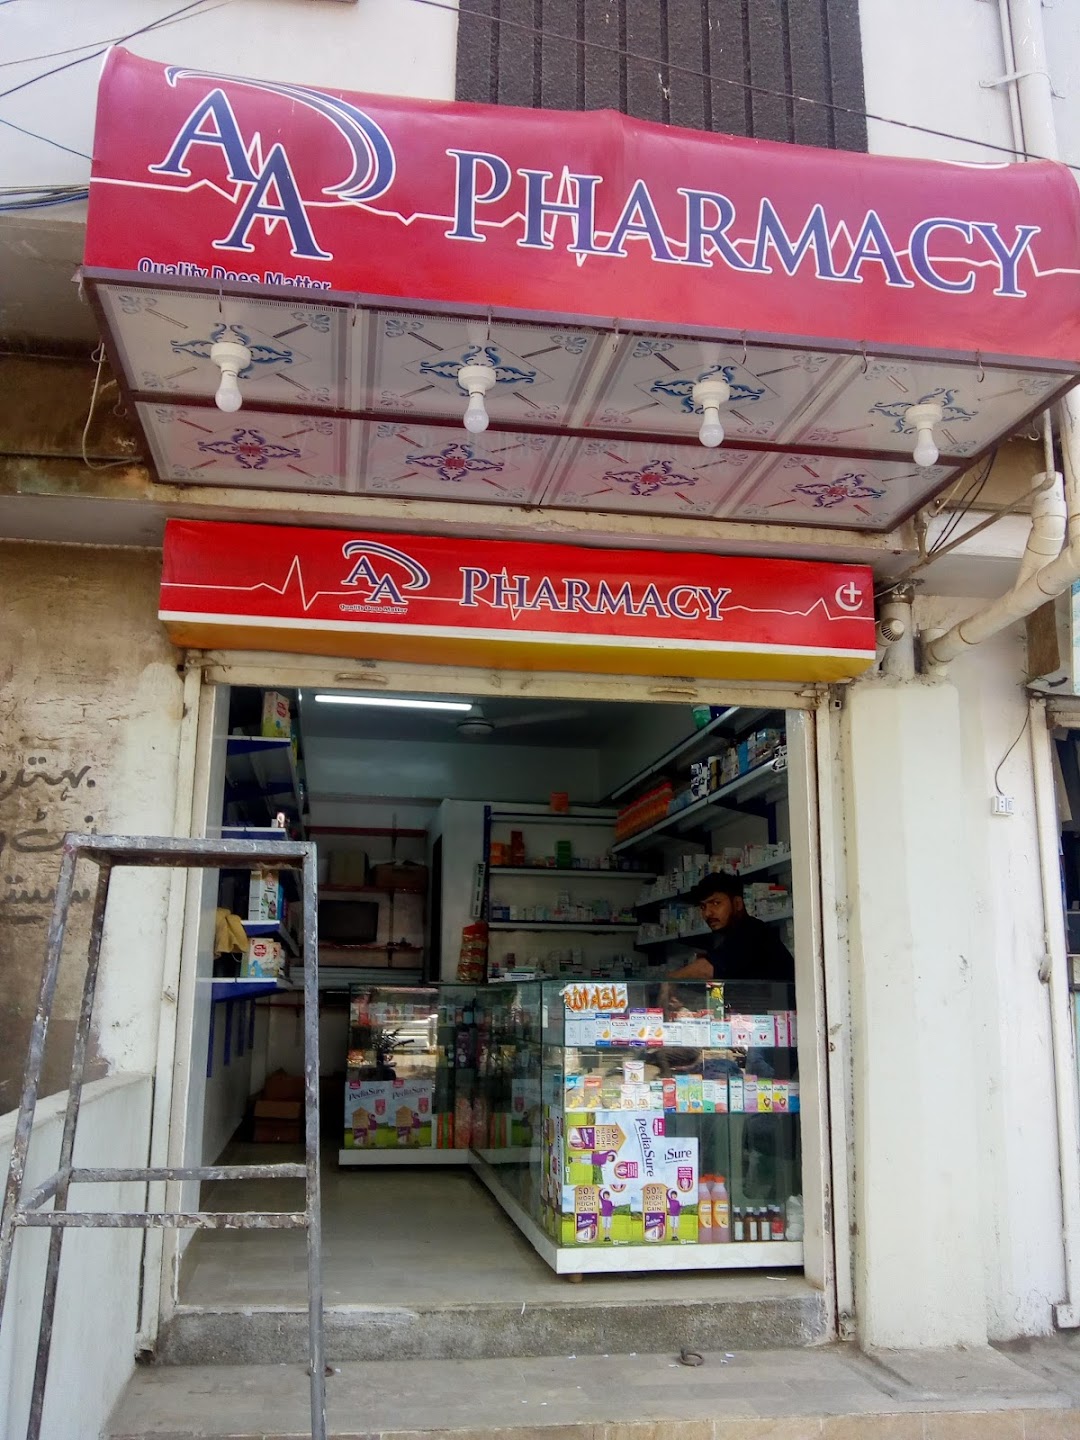 AA Pharmacy